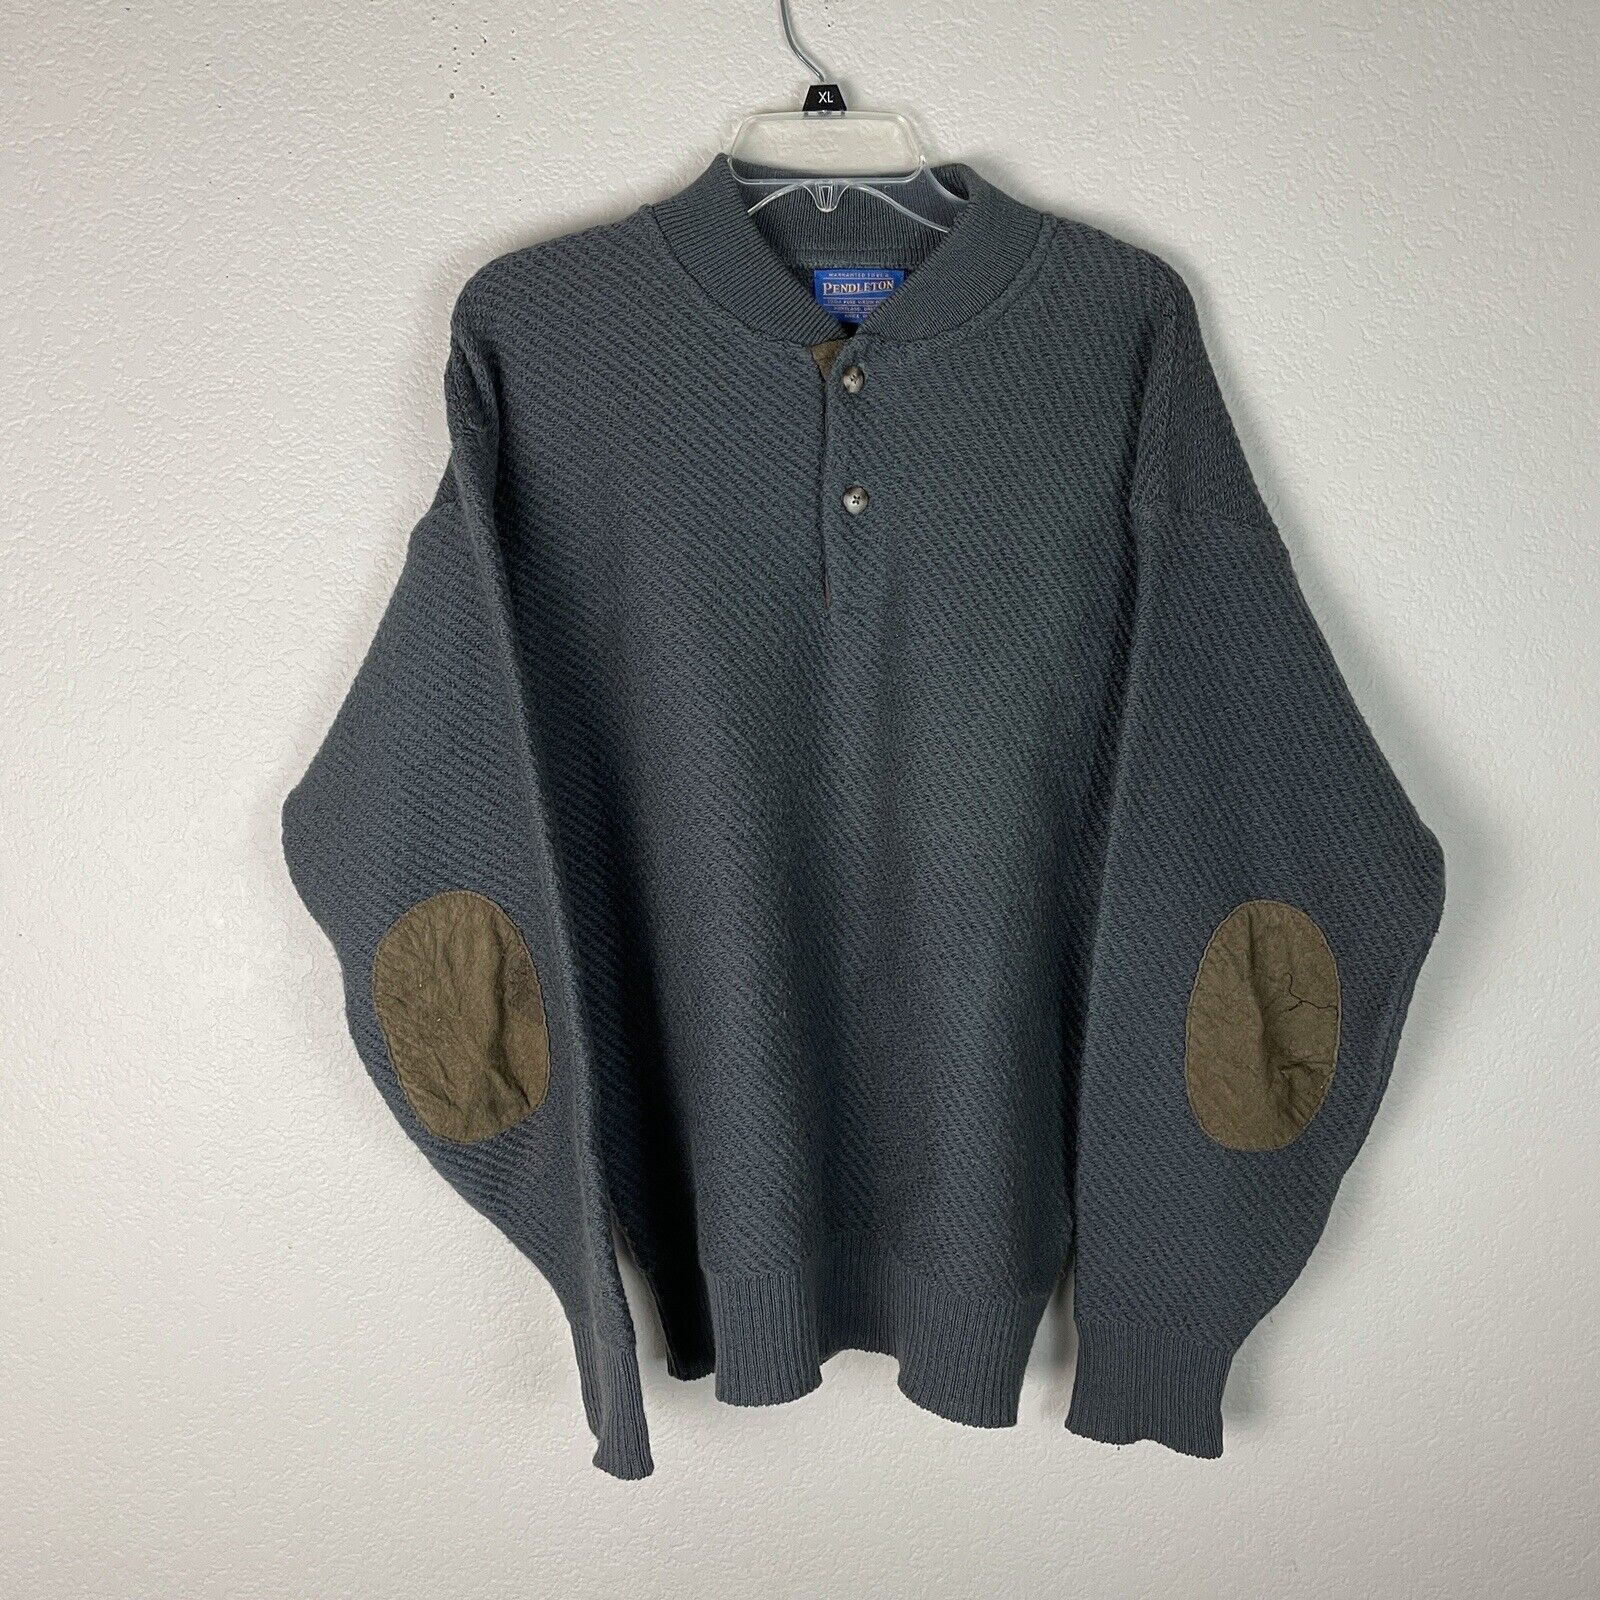 Pendleton Vintage Sweater Size Large